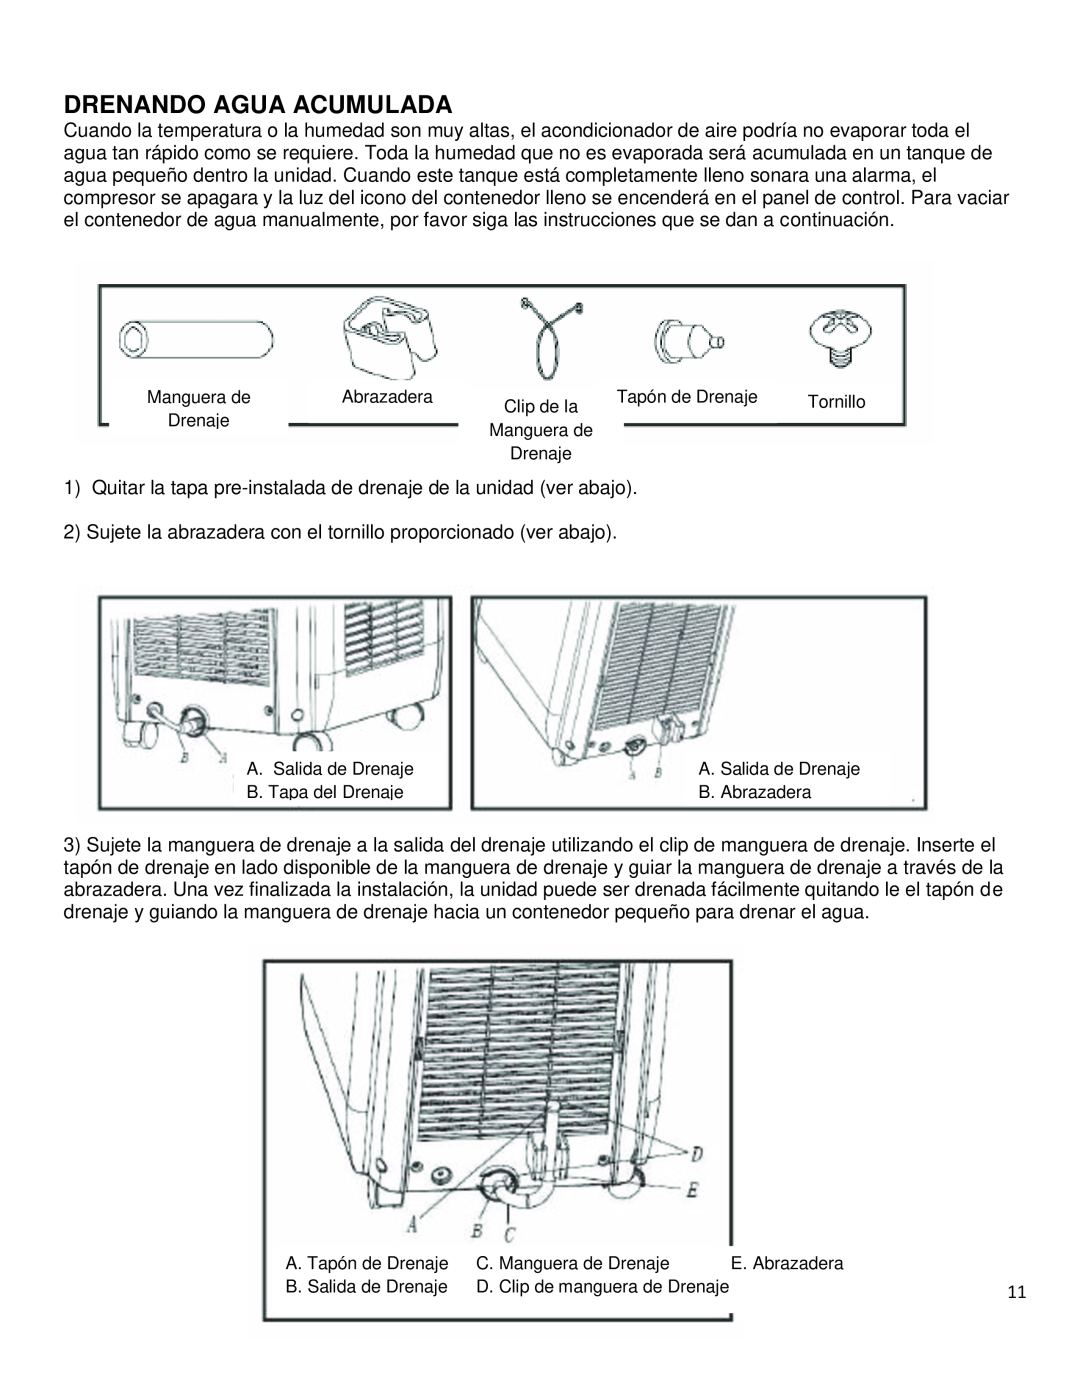 Soleus Air GL-PAC-08E4 manual Drenando Agua Acumulada 